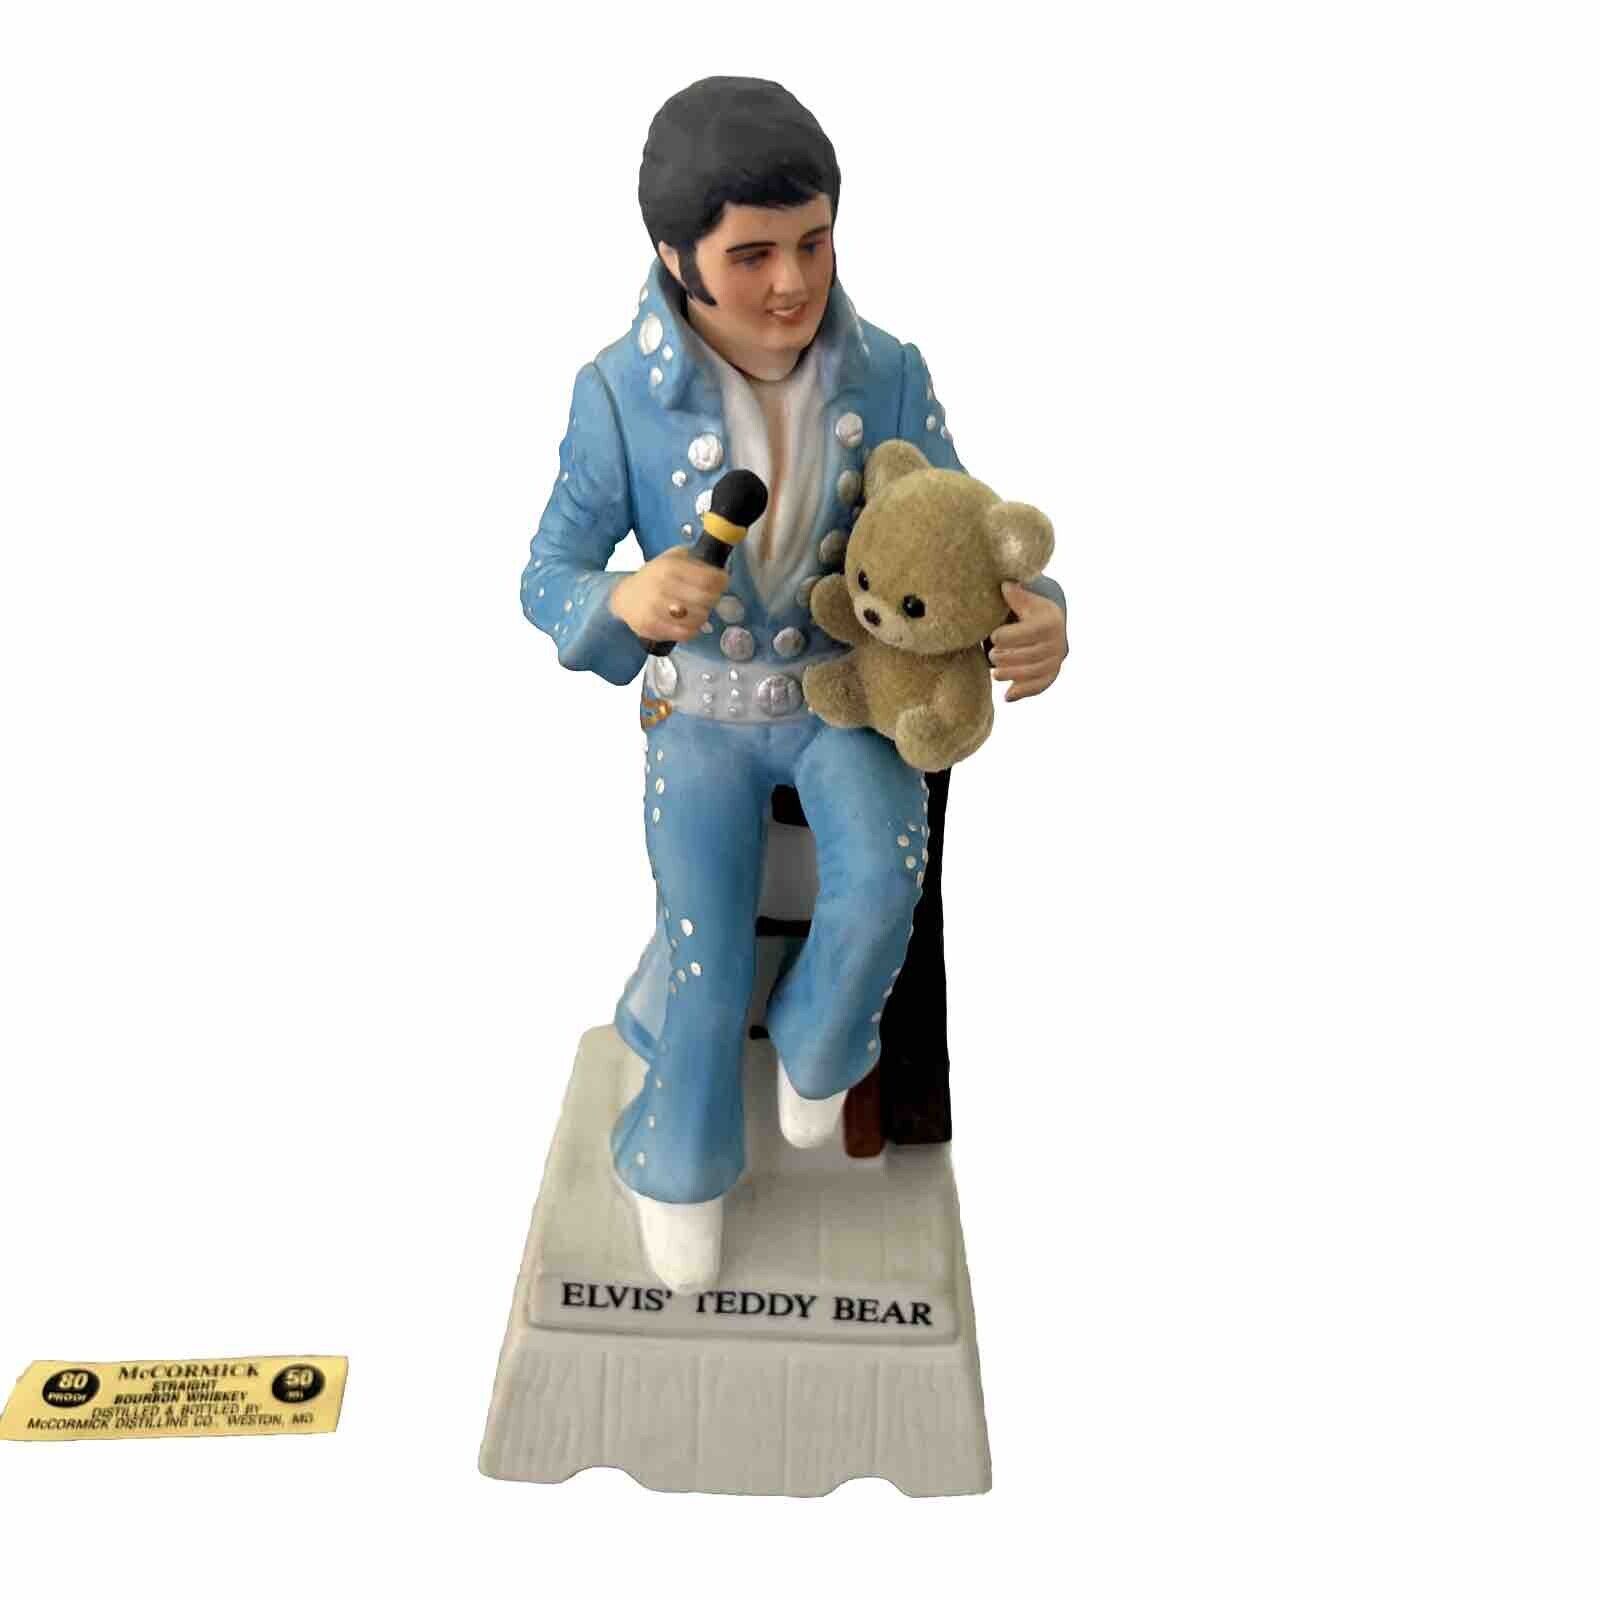 Elvis’ Teddy Bear Mccormick Decanter Music Box